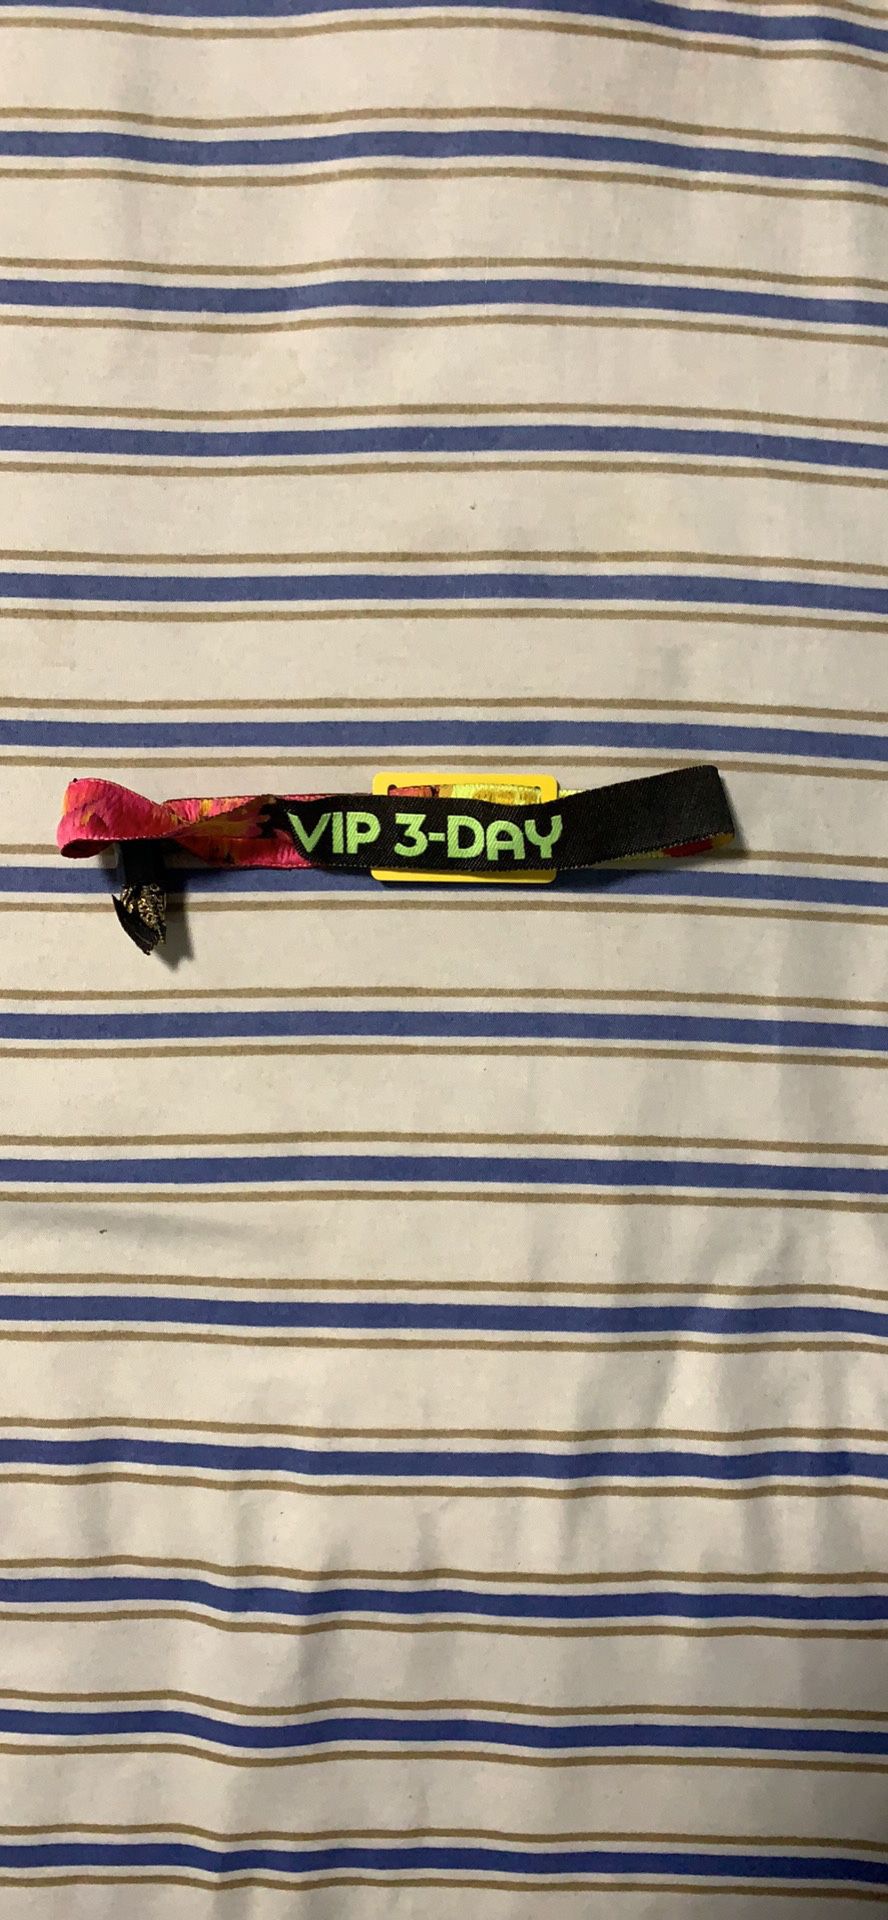 EDC Orlando 3Day VIP Wristband